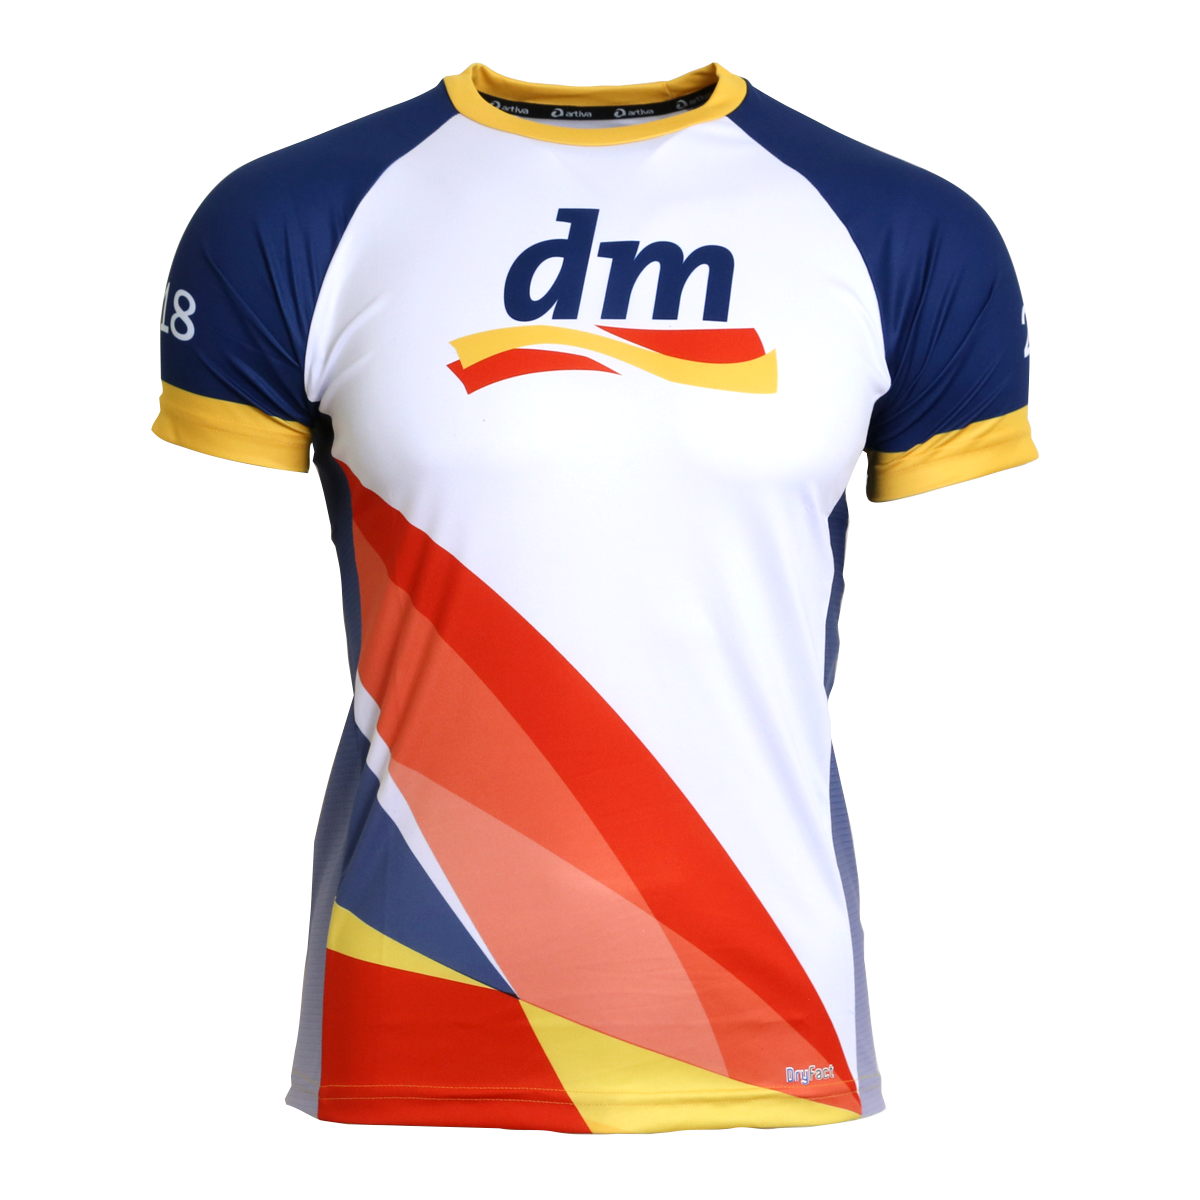 dm_performance-shirt_men_front